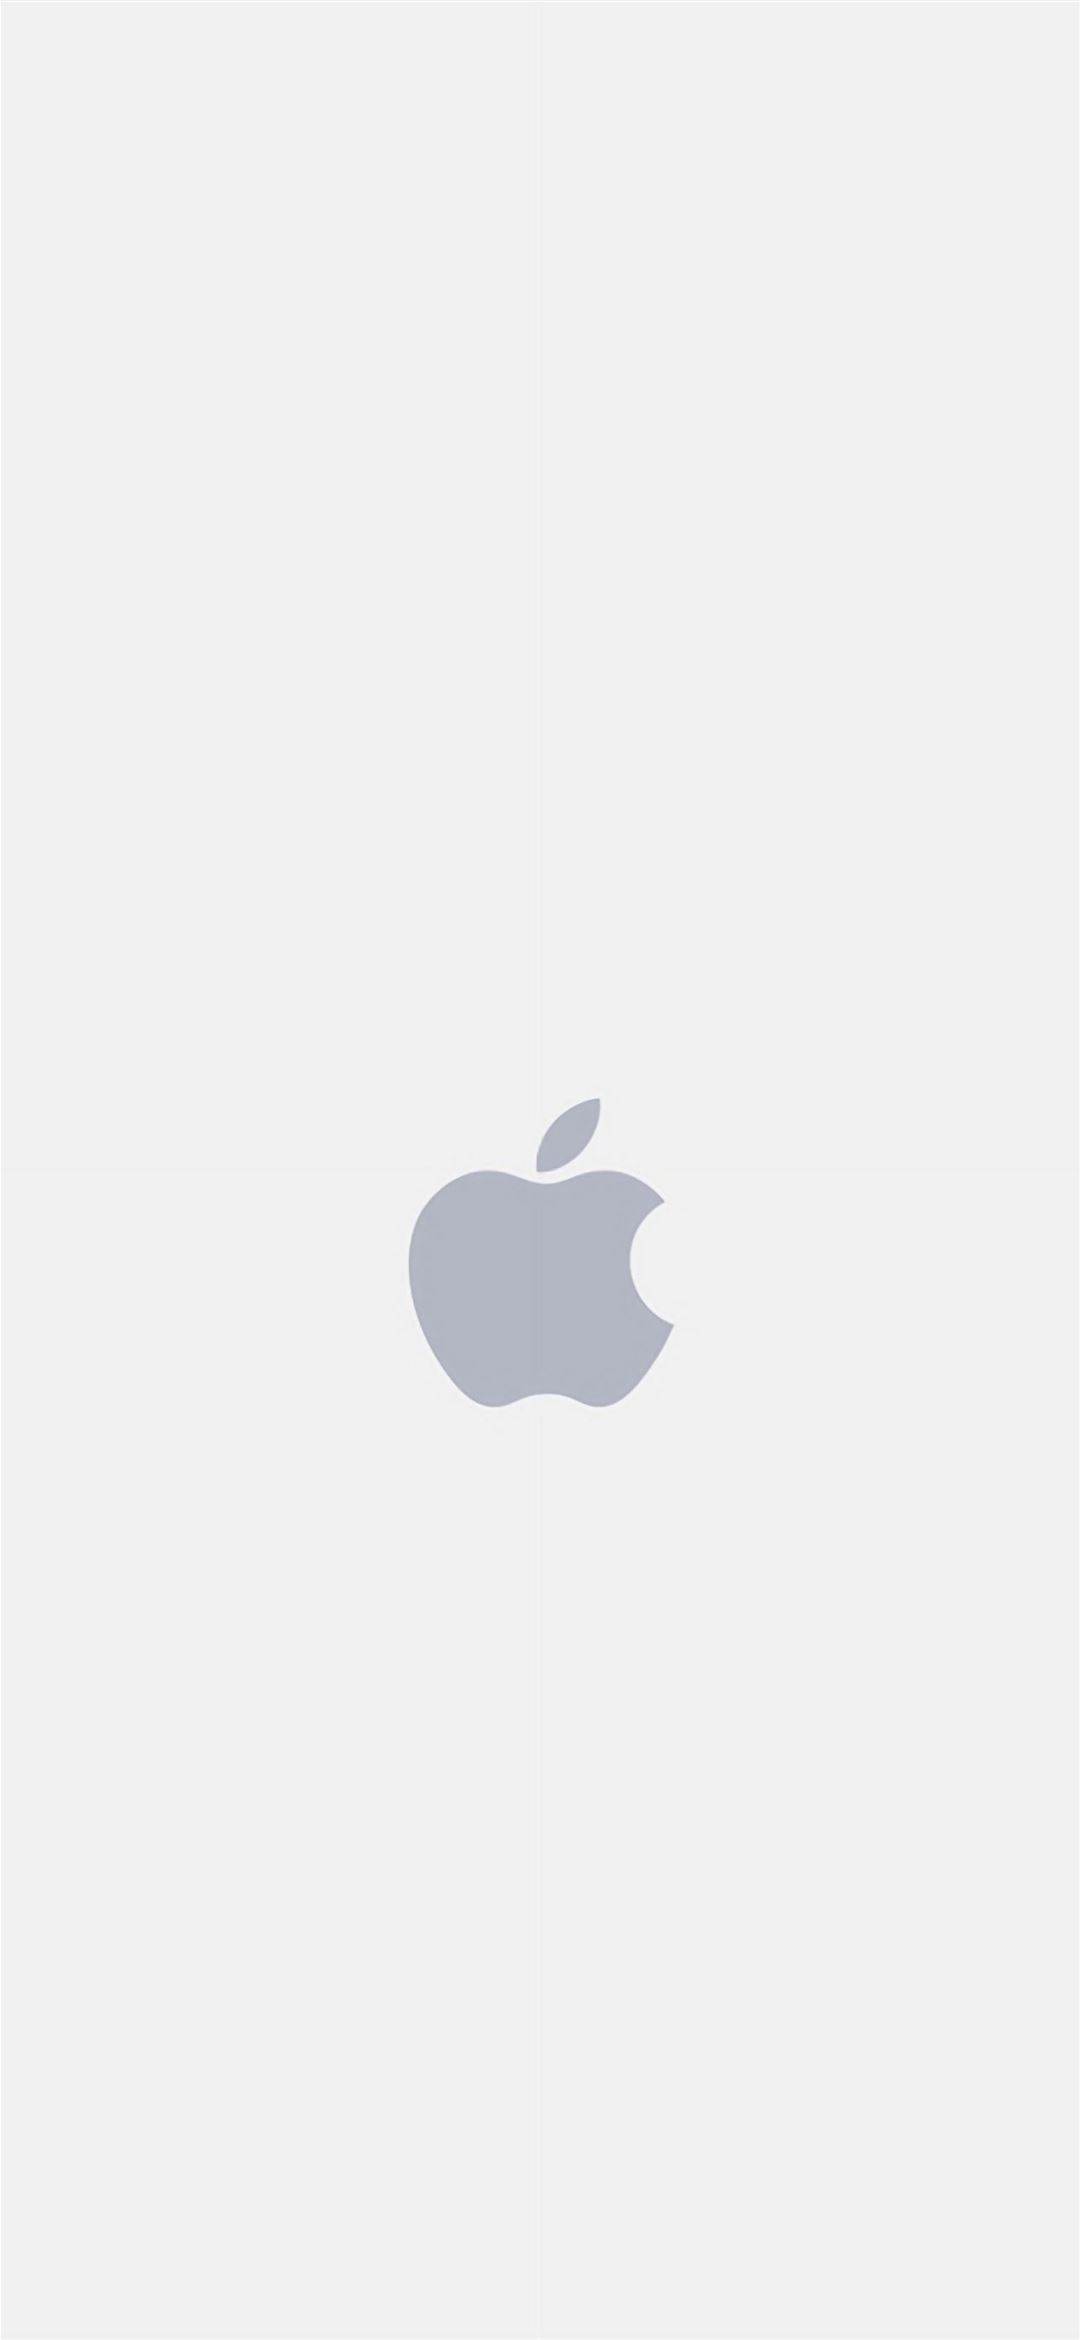 Apple logo Wallpaper 4K Glowing Reflection Lake 6482